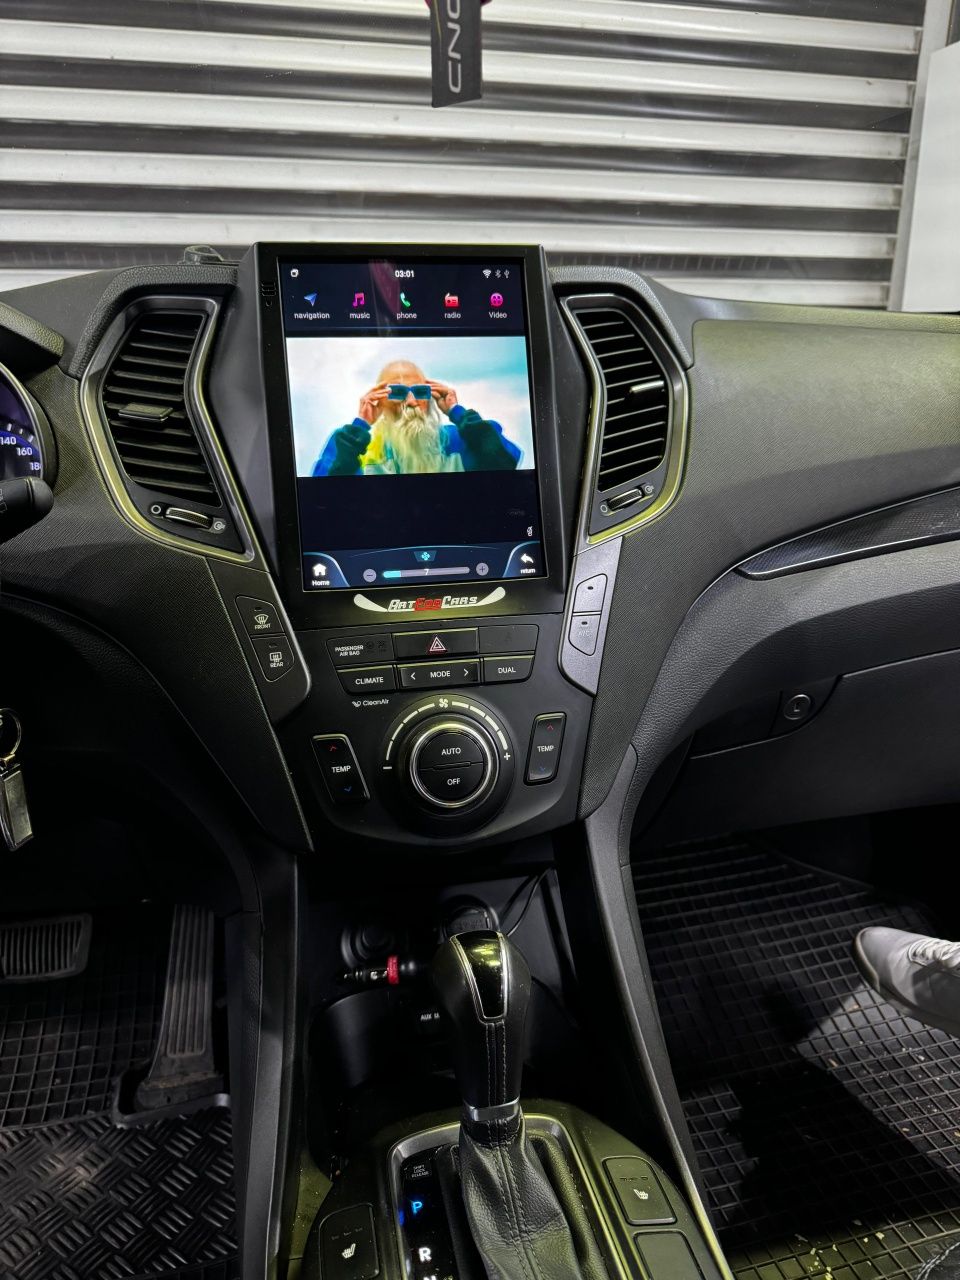 Navigatii auto, senzori parcare, sistem camere 360, sisteme audio